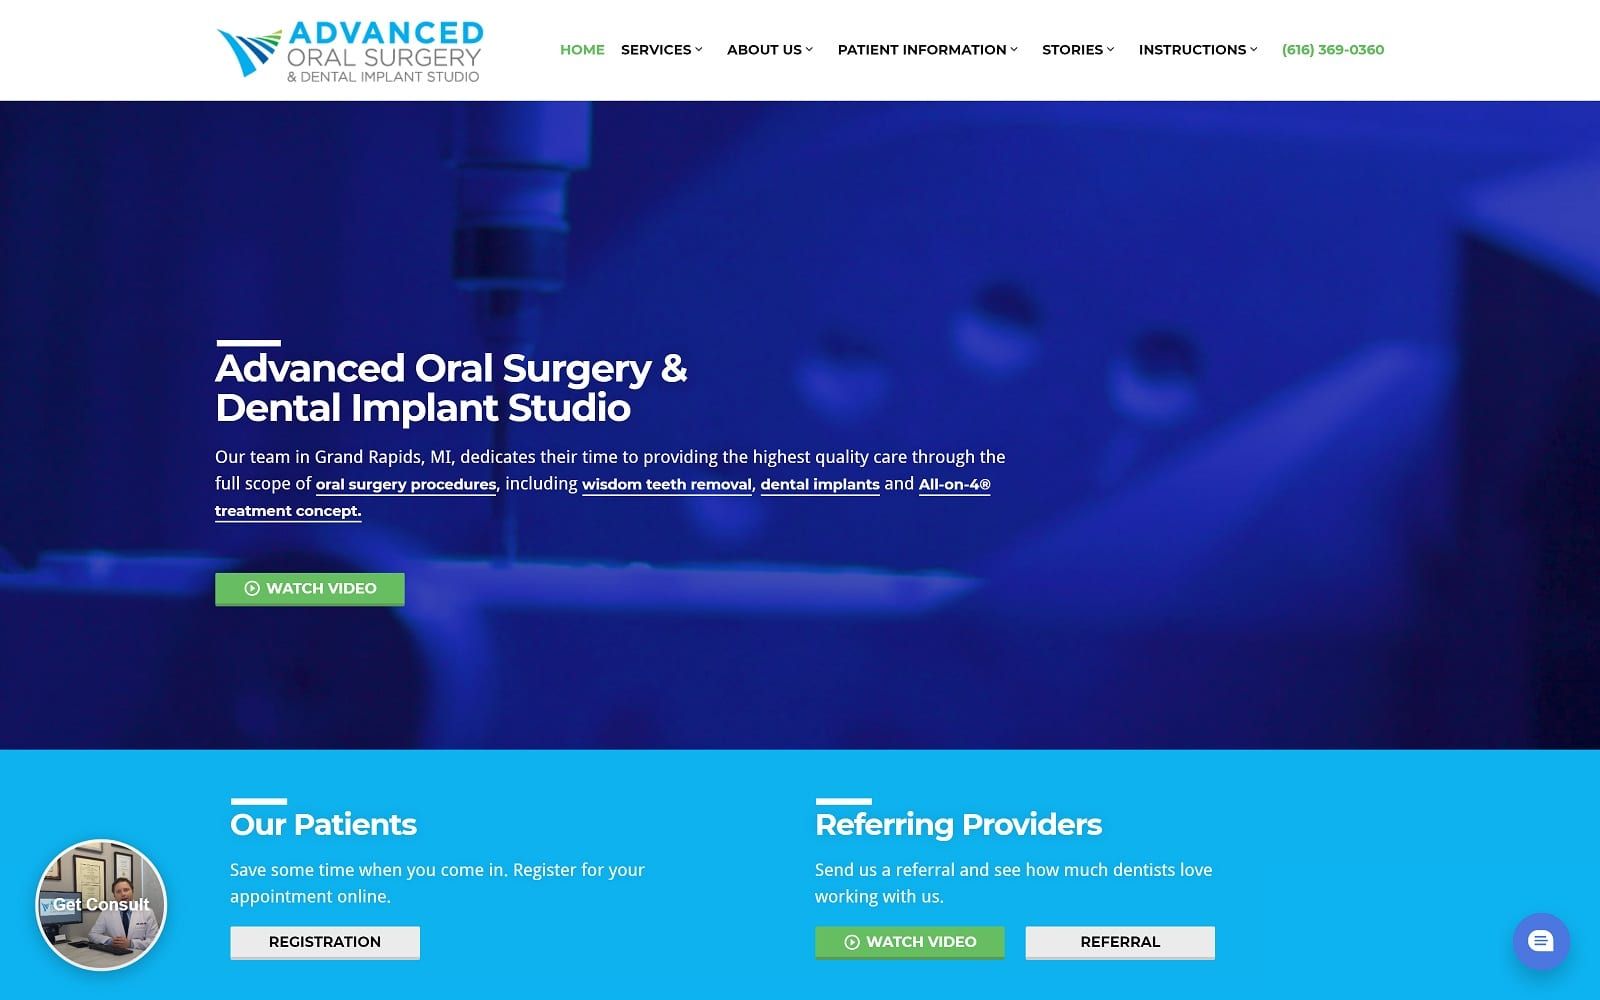 The screenshot of advanced oral surgery & dental implant studio and wisdom teeth advancedoralsurgerymi. Com website